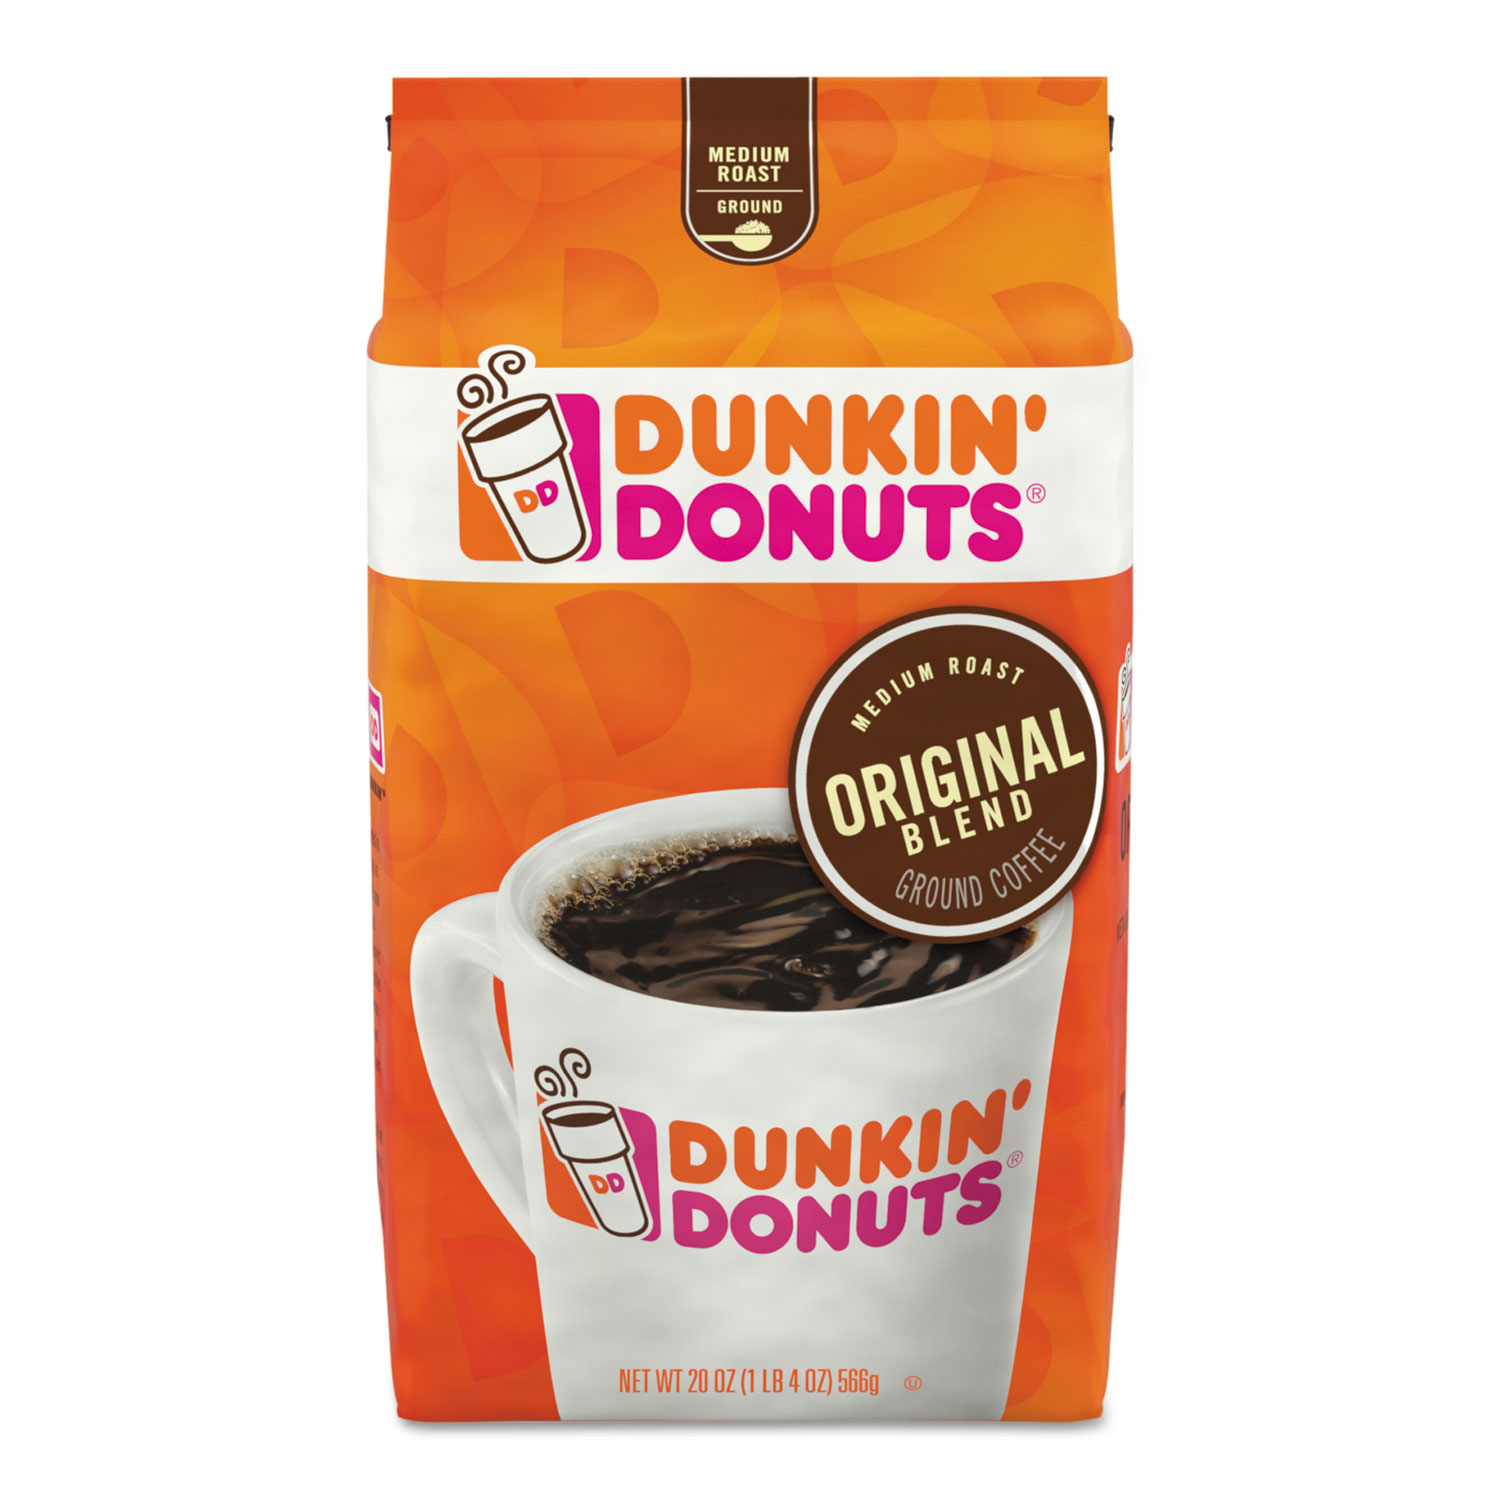  Dunkin Donuts SMU00678 Original Blend Coffee, Dunkin Original, 20 oz (FOL00678) 